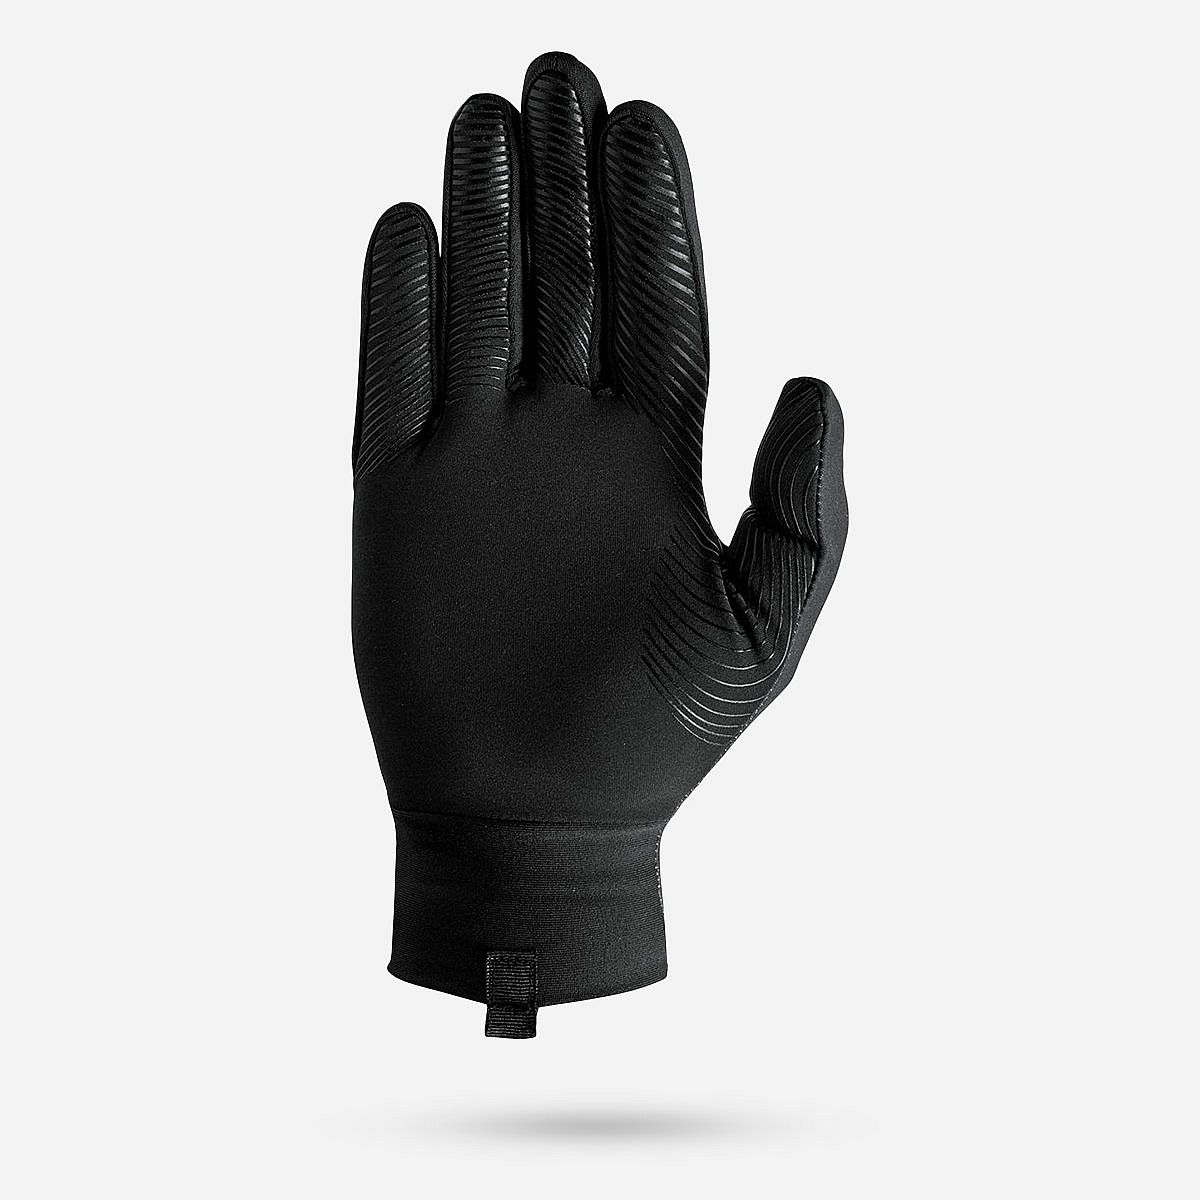 AN286230 Men's Base Layer Gloves